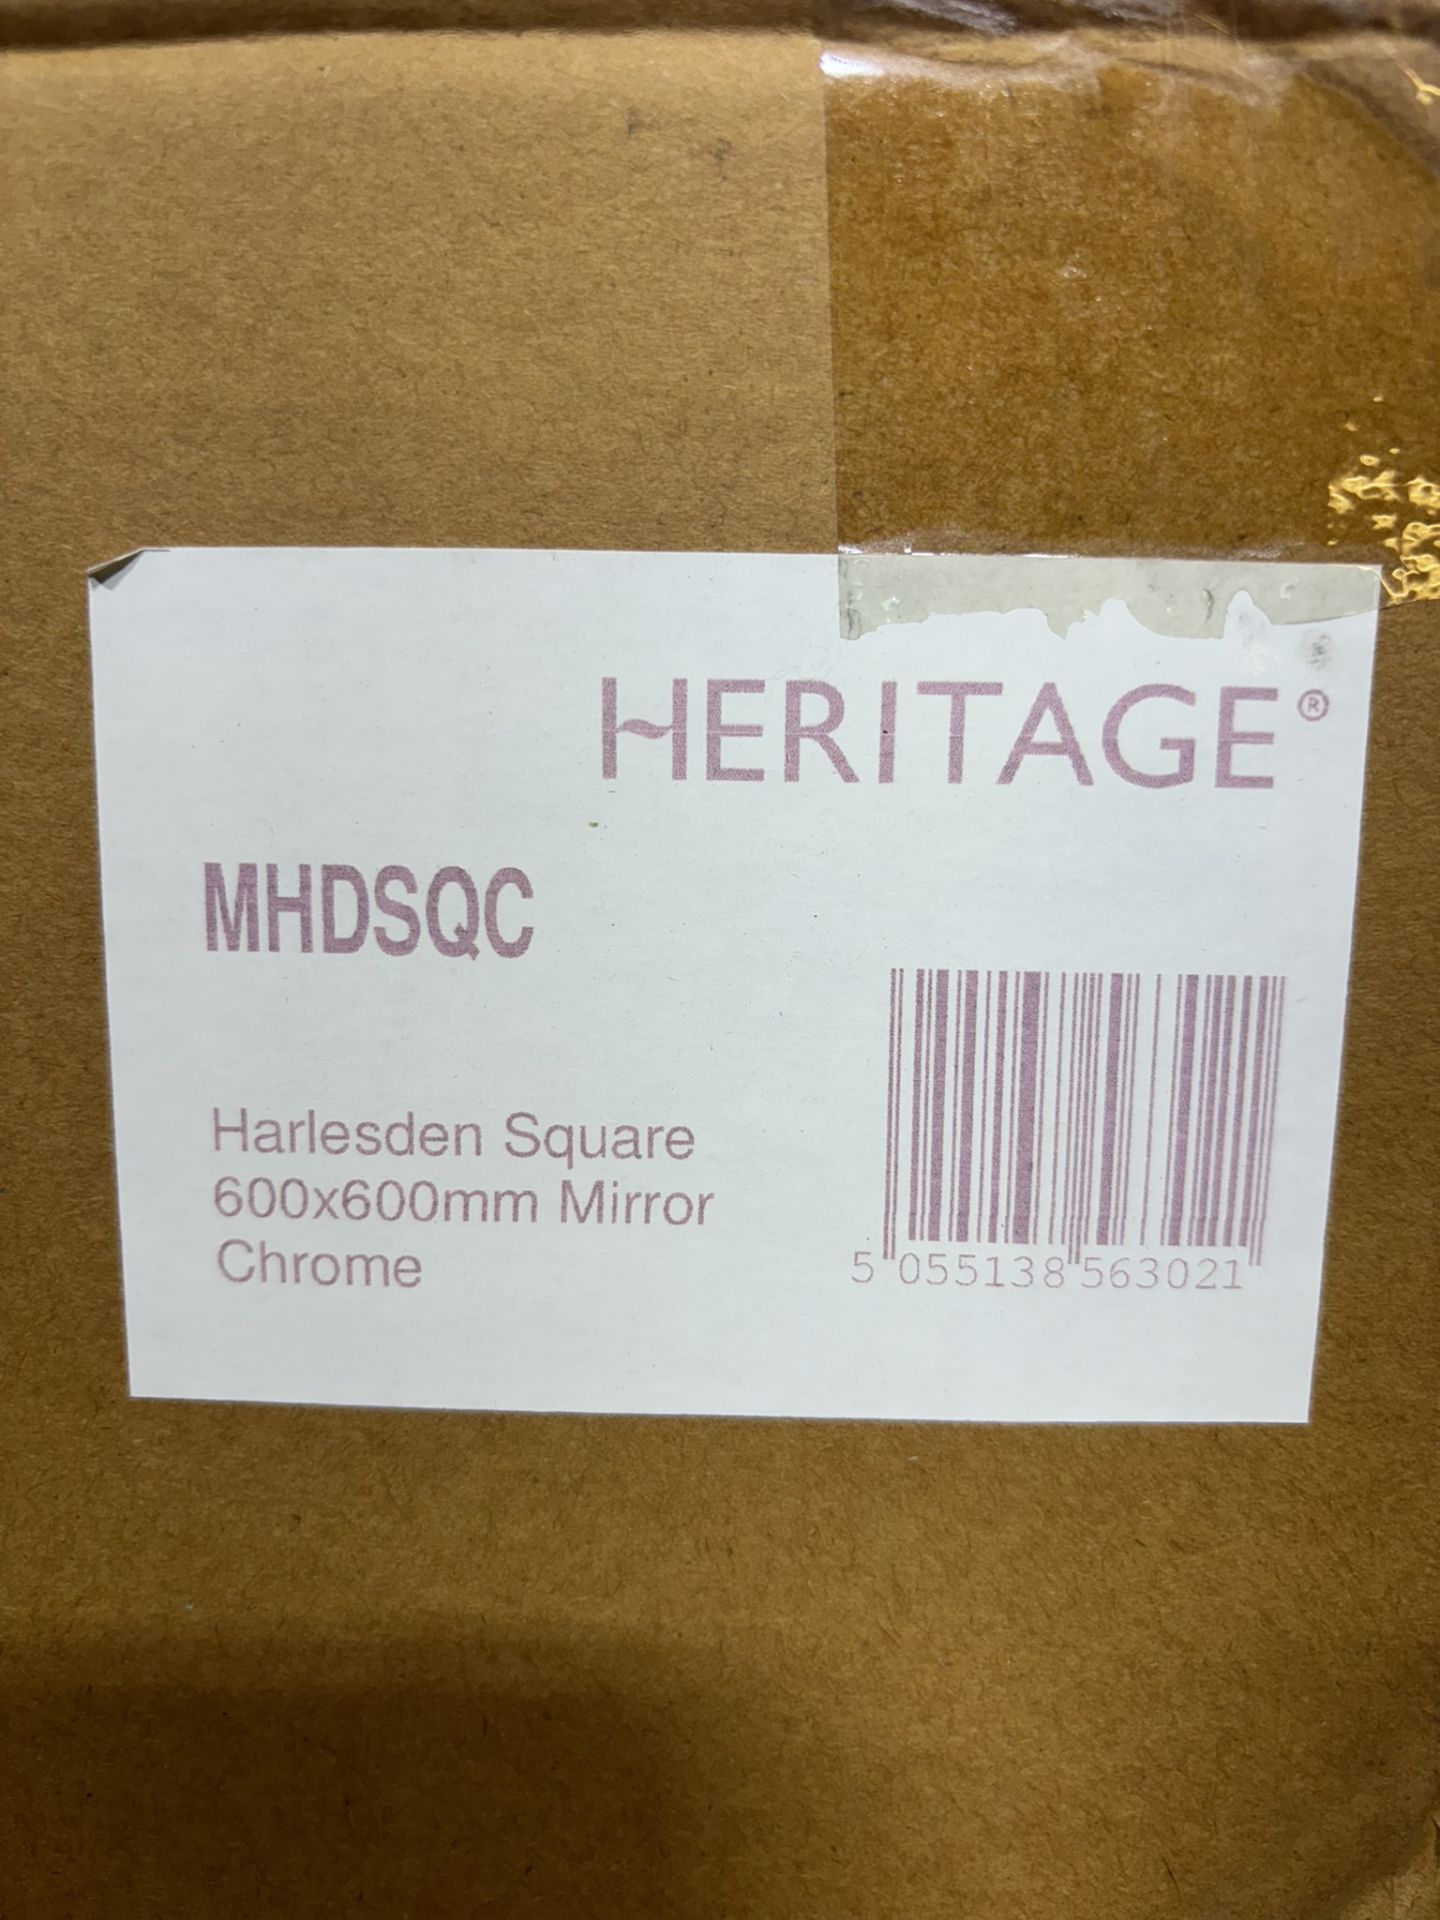 Heritage MHDSQC Harlesden Square 600mm x 600mm Mirror - Chrome - Image 2 of 3